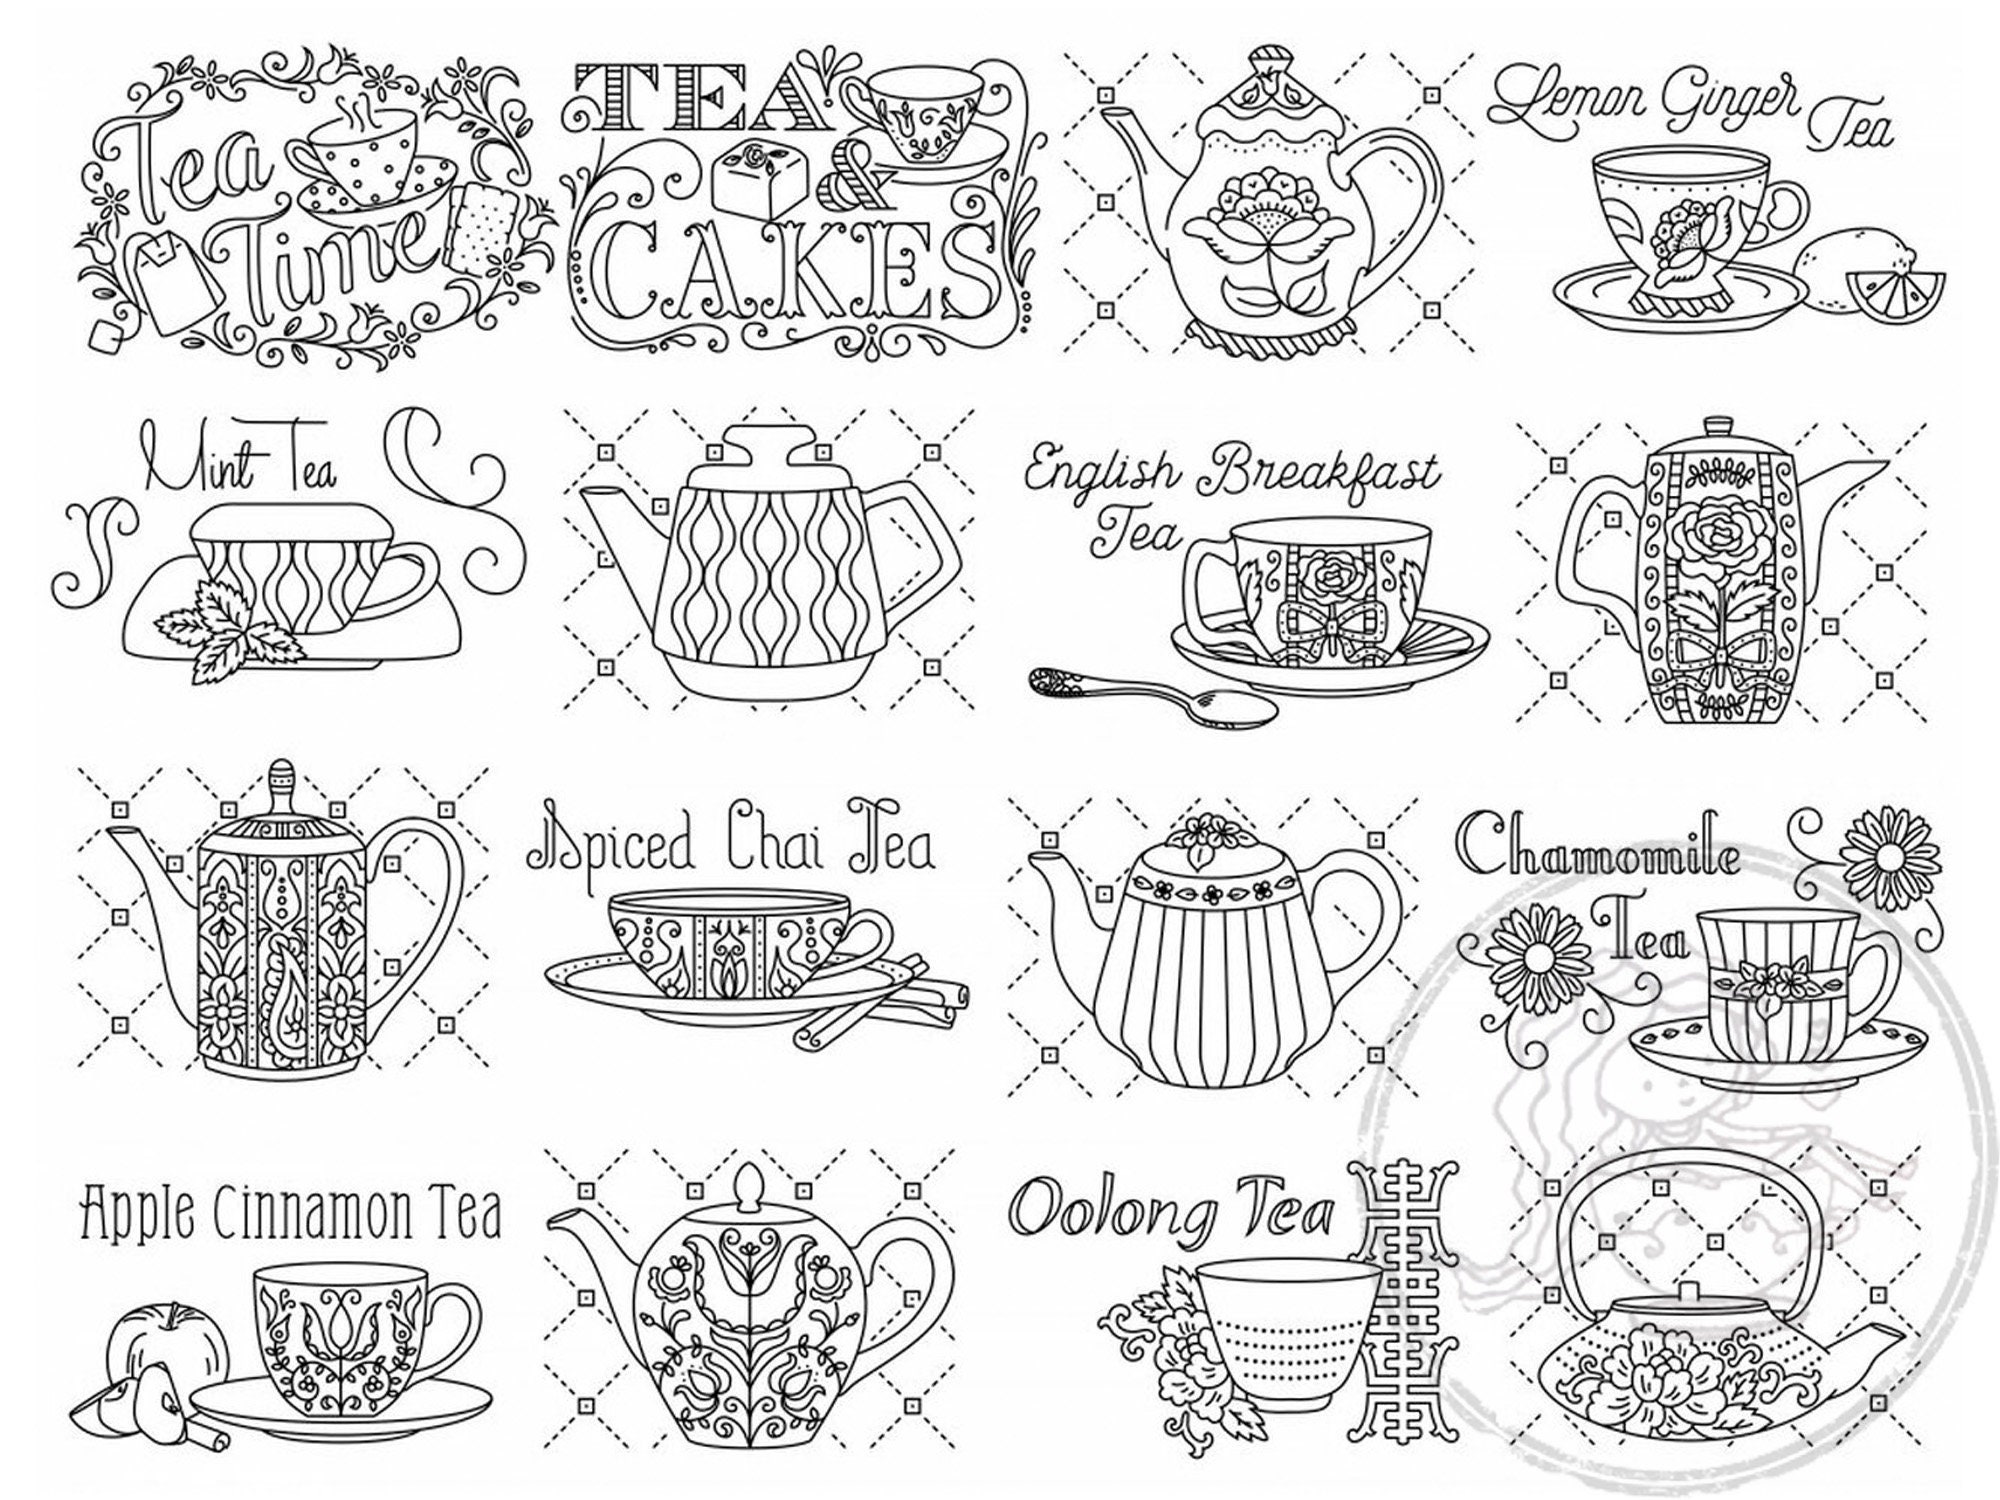 I DO】Persimmon dyed tea mat handmade double-sided embroidery tea